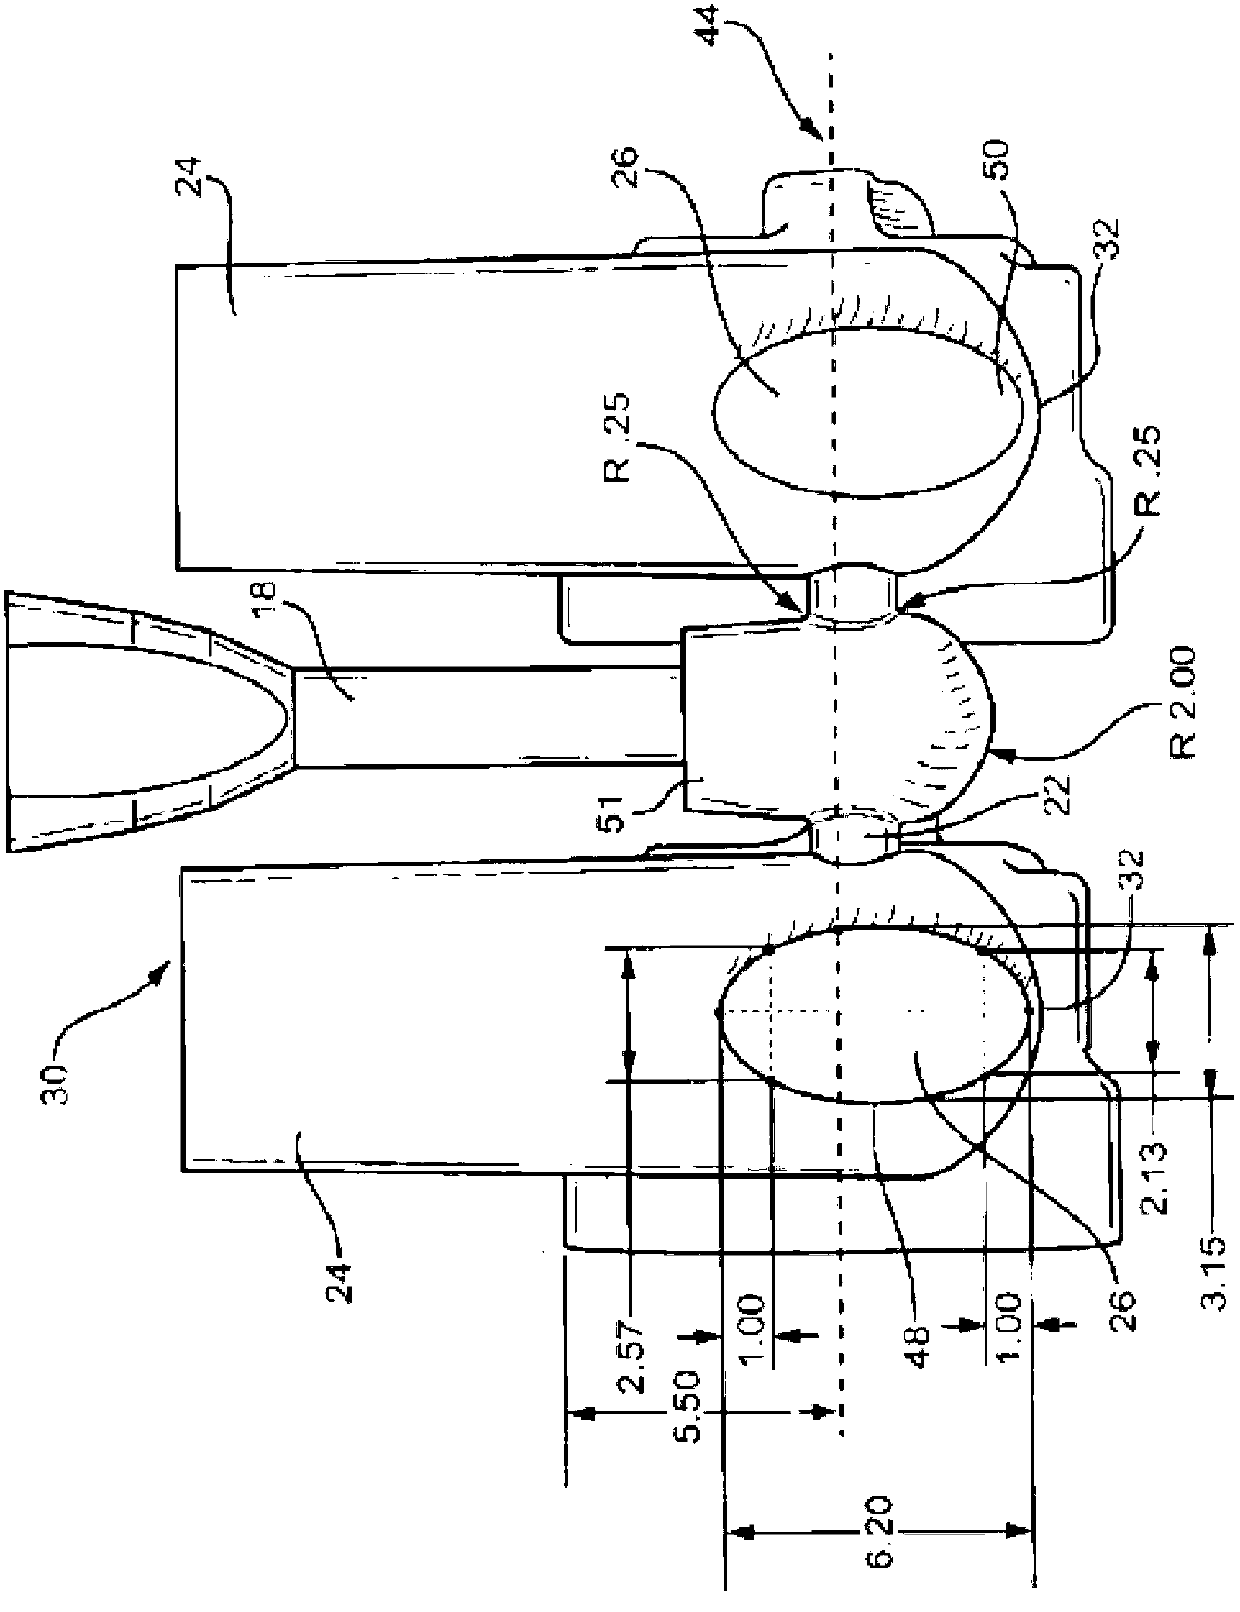 Rigging system for casting railcar coupler parts